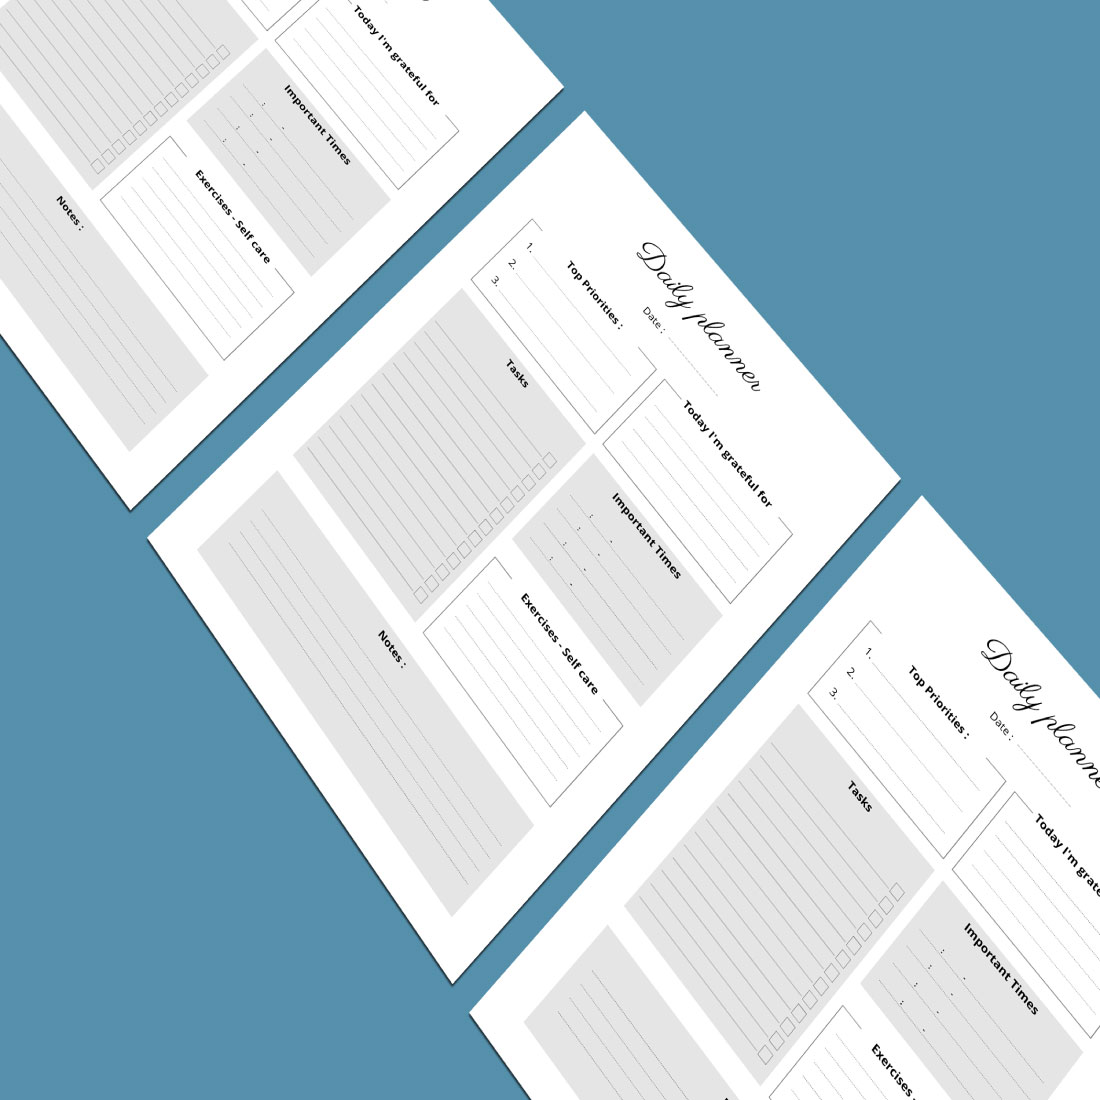 KDP Printable Daily Planner Design KDP preview image.